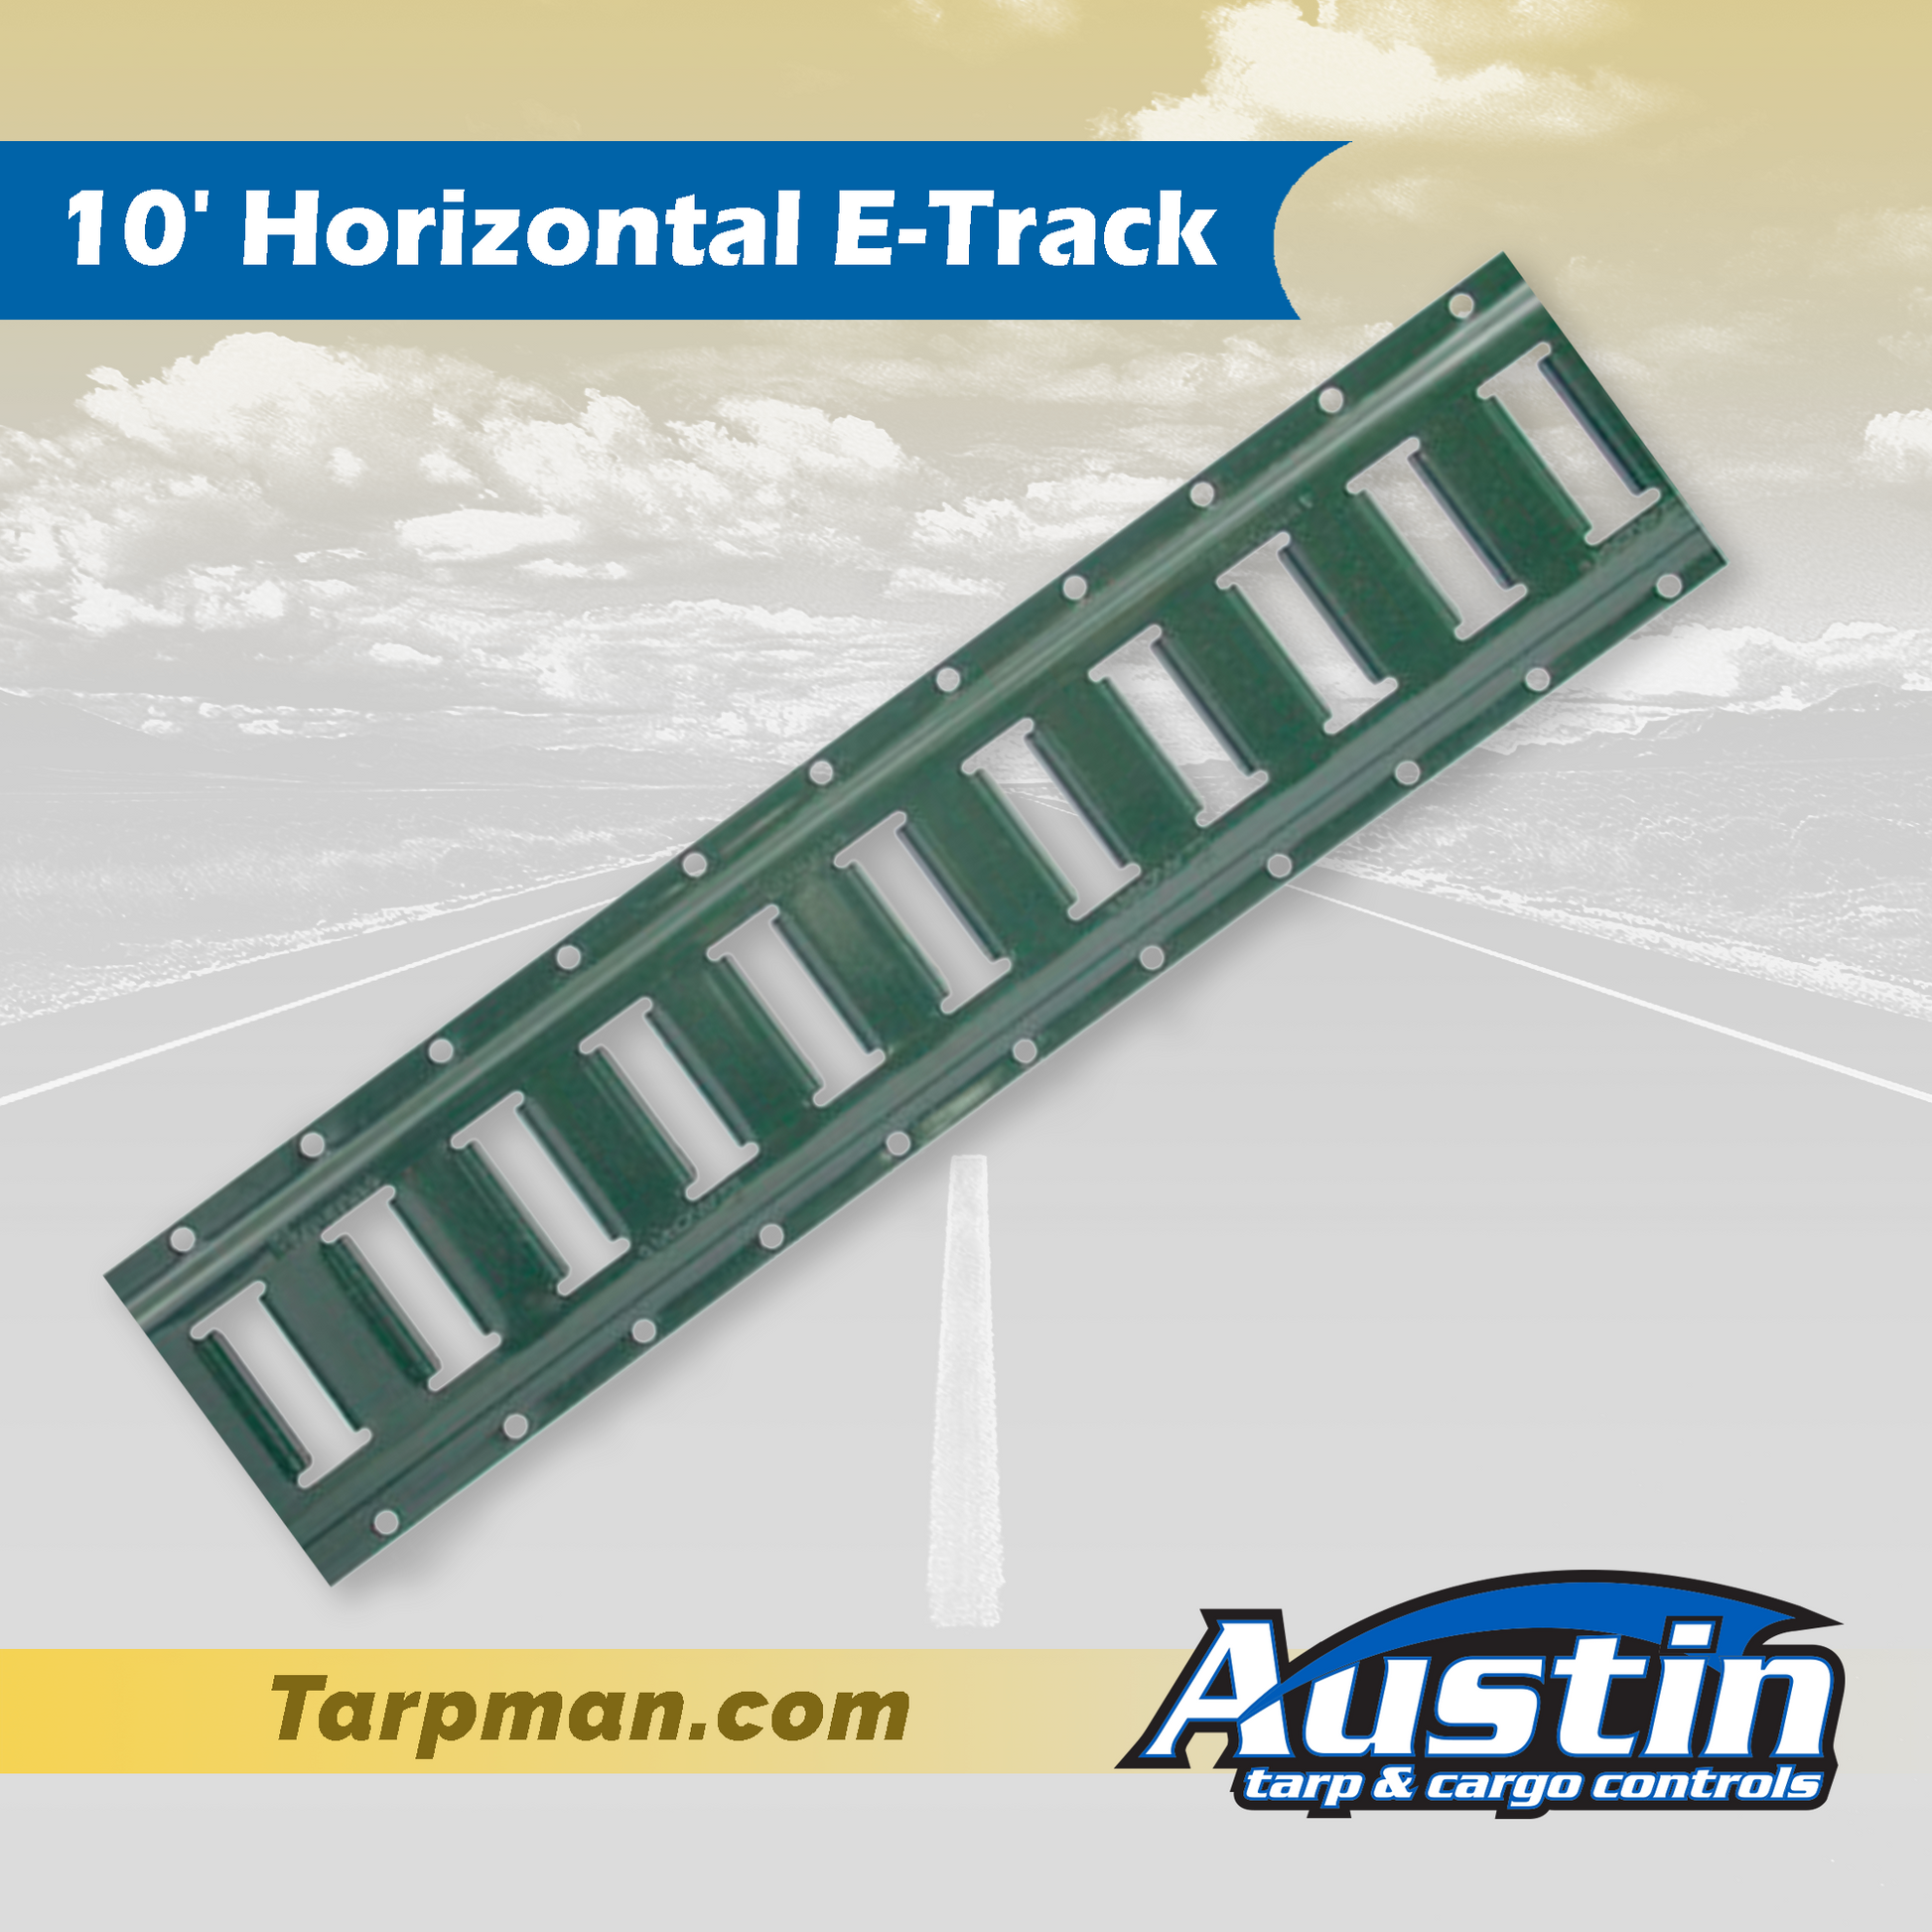 10' Horizontal E-Track Tarpman.com | Austin Tarp & Cargo Controls